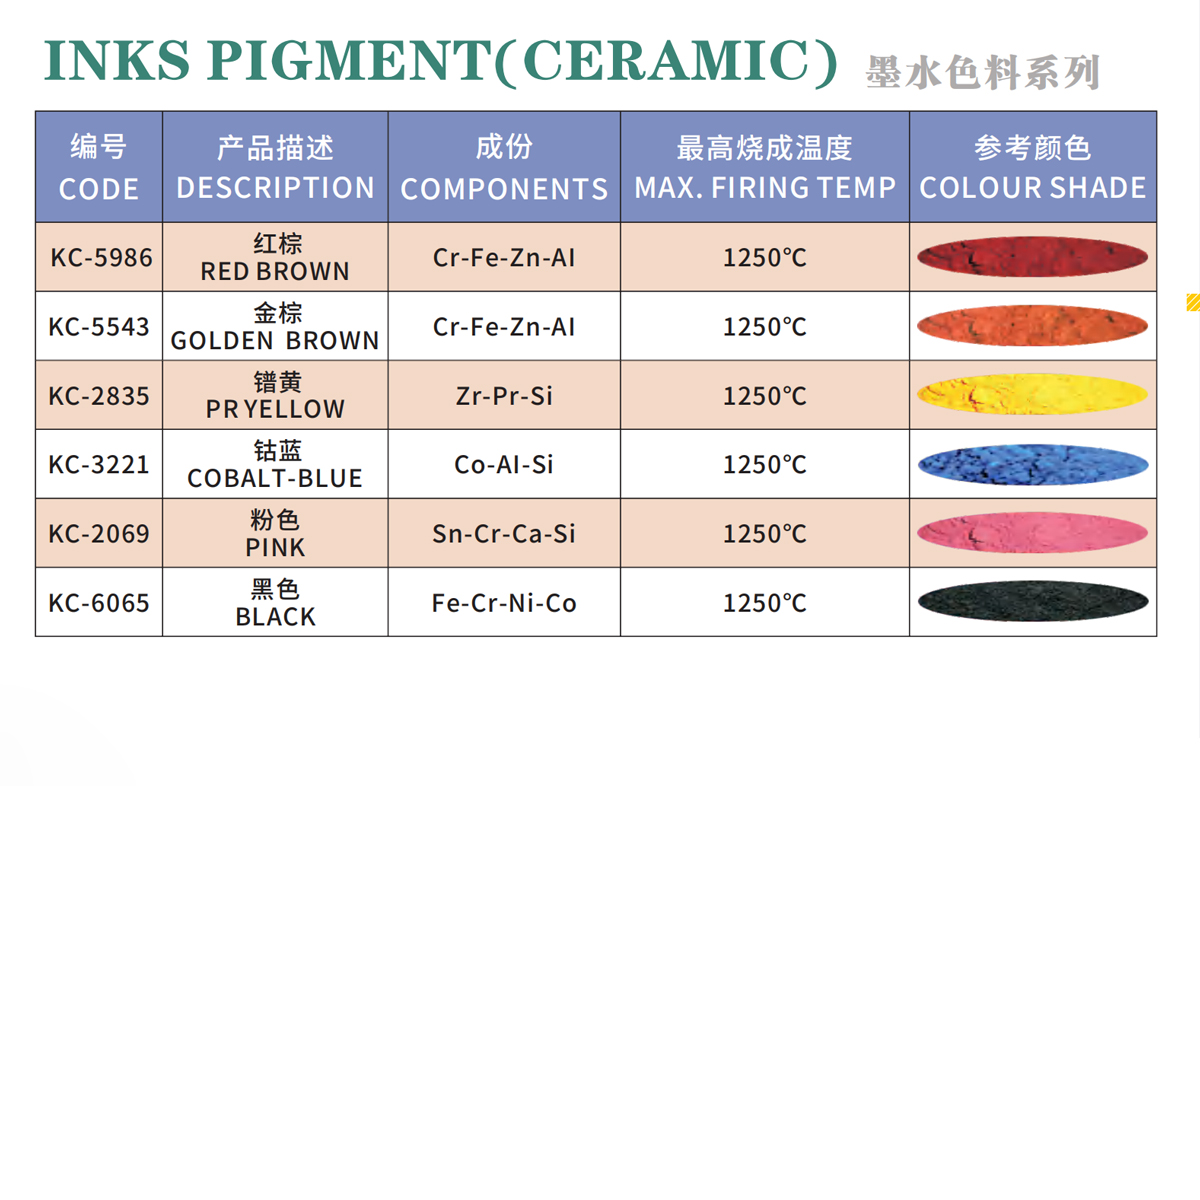 inks pigment1